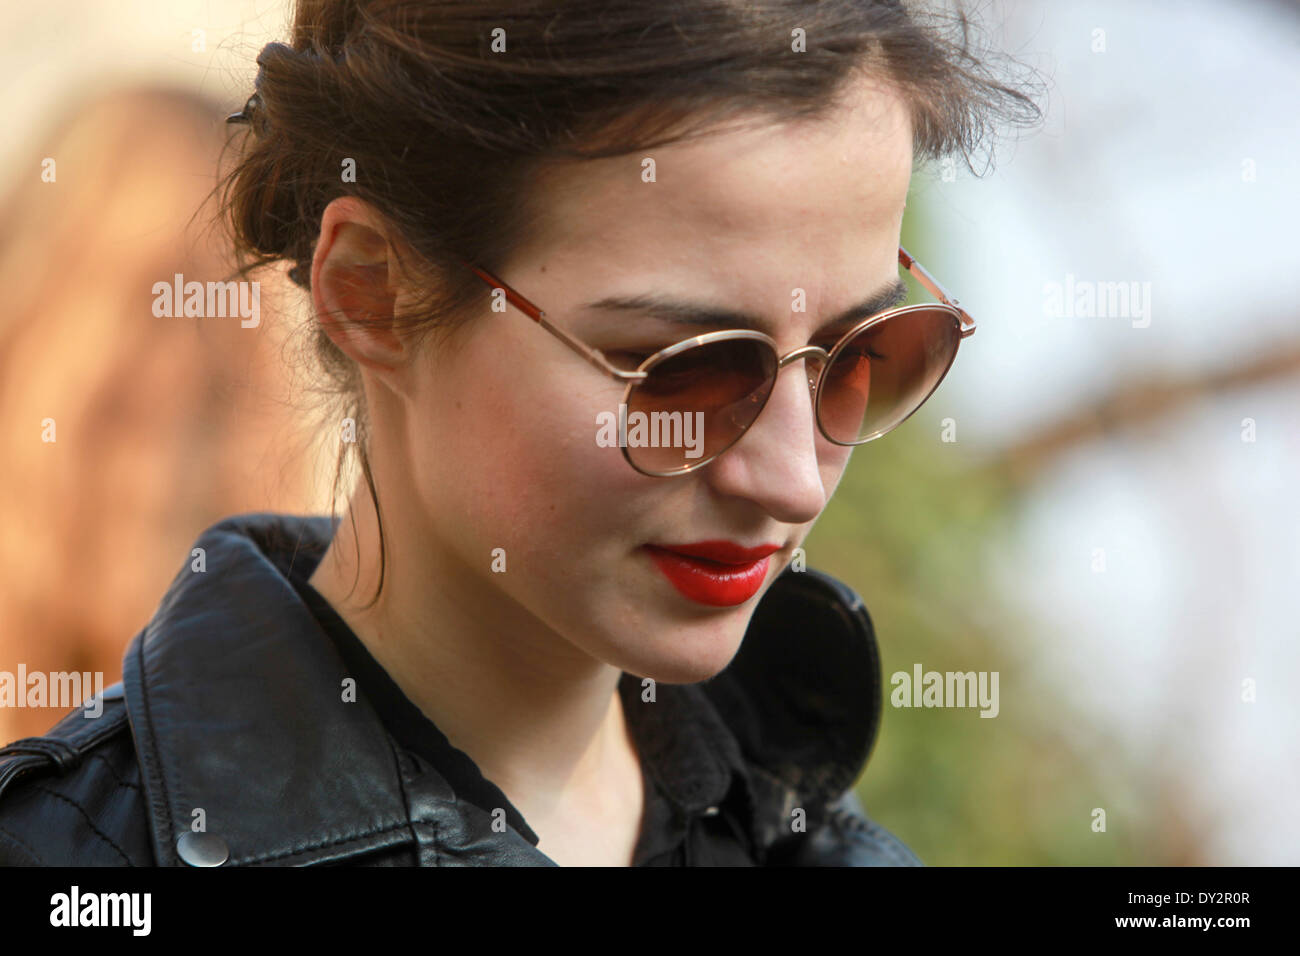 Young woman sunglasses and red lipstick Tourist, Prague Czech Republic Stock Photo